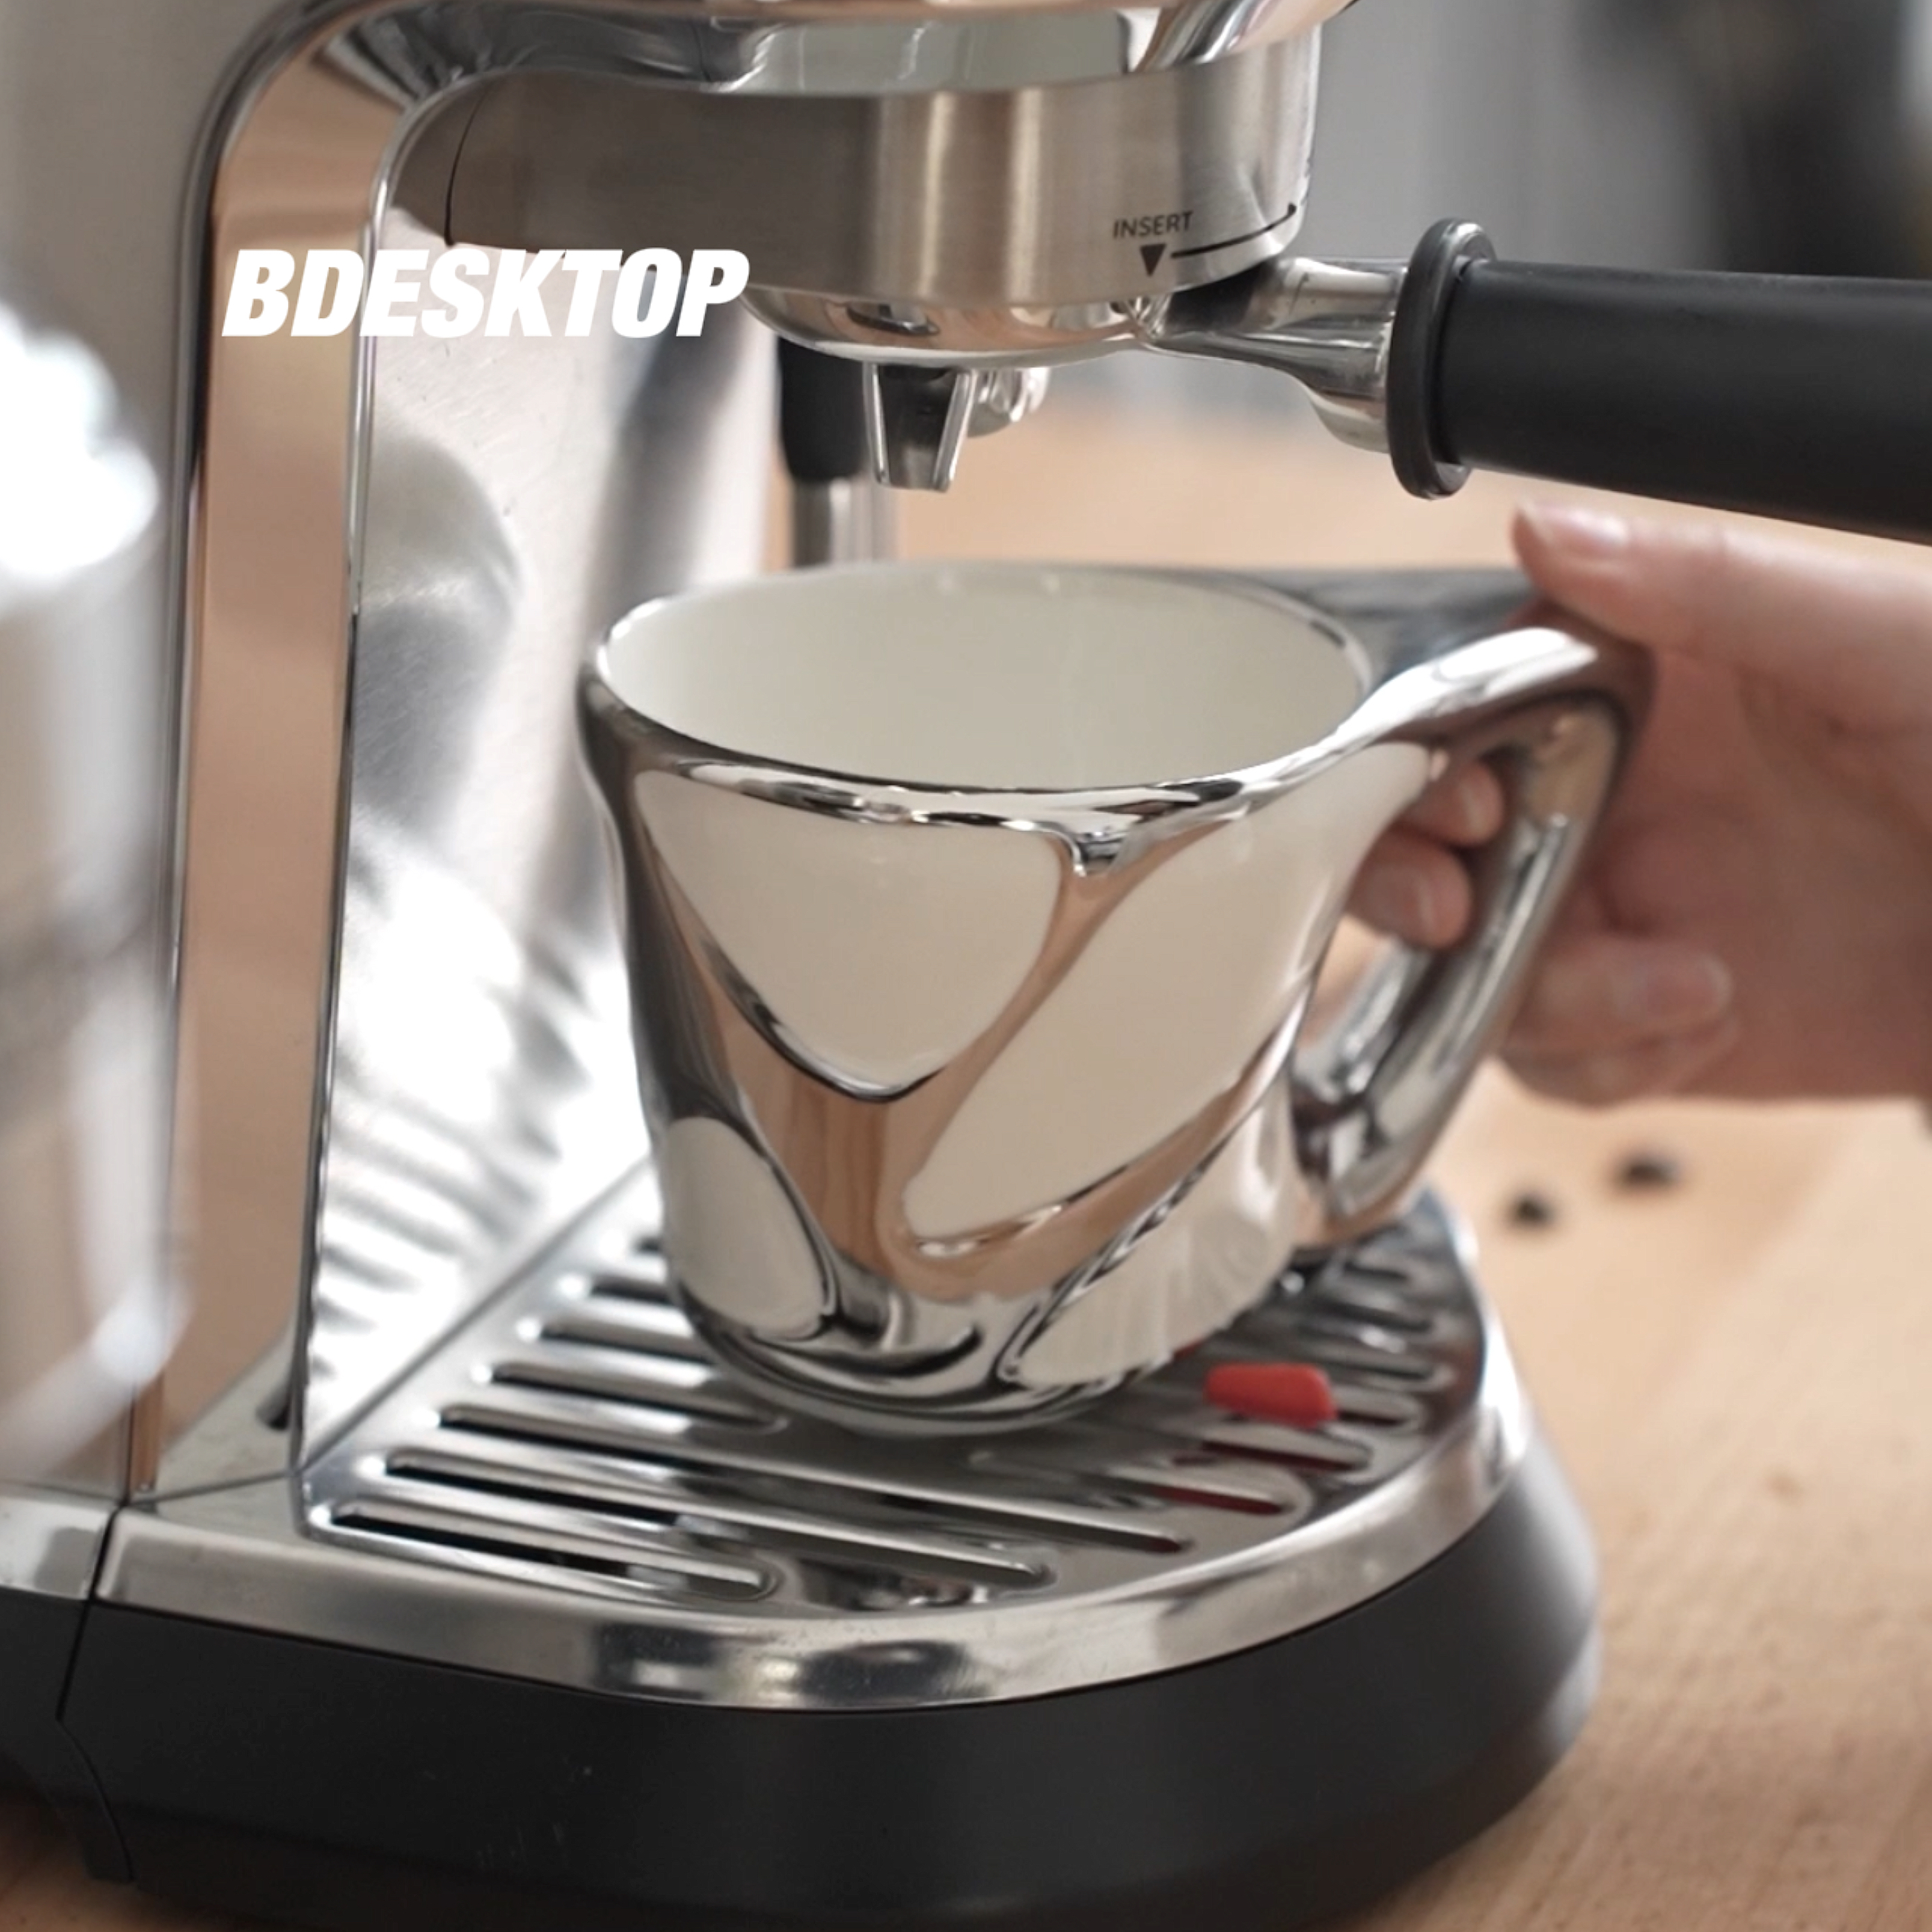 Bdesktop Design Shop | Textured Ceramic Coffee Mug-Caffeine Awakens Wandering Brain Cell